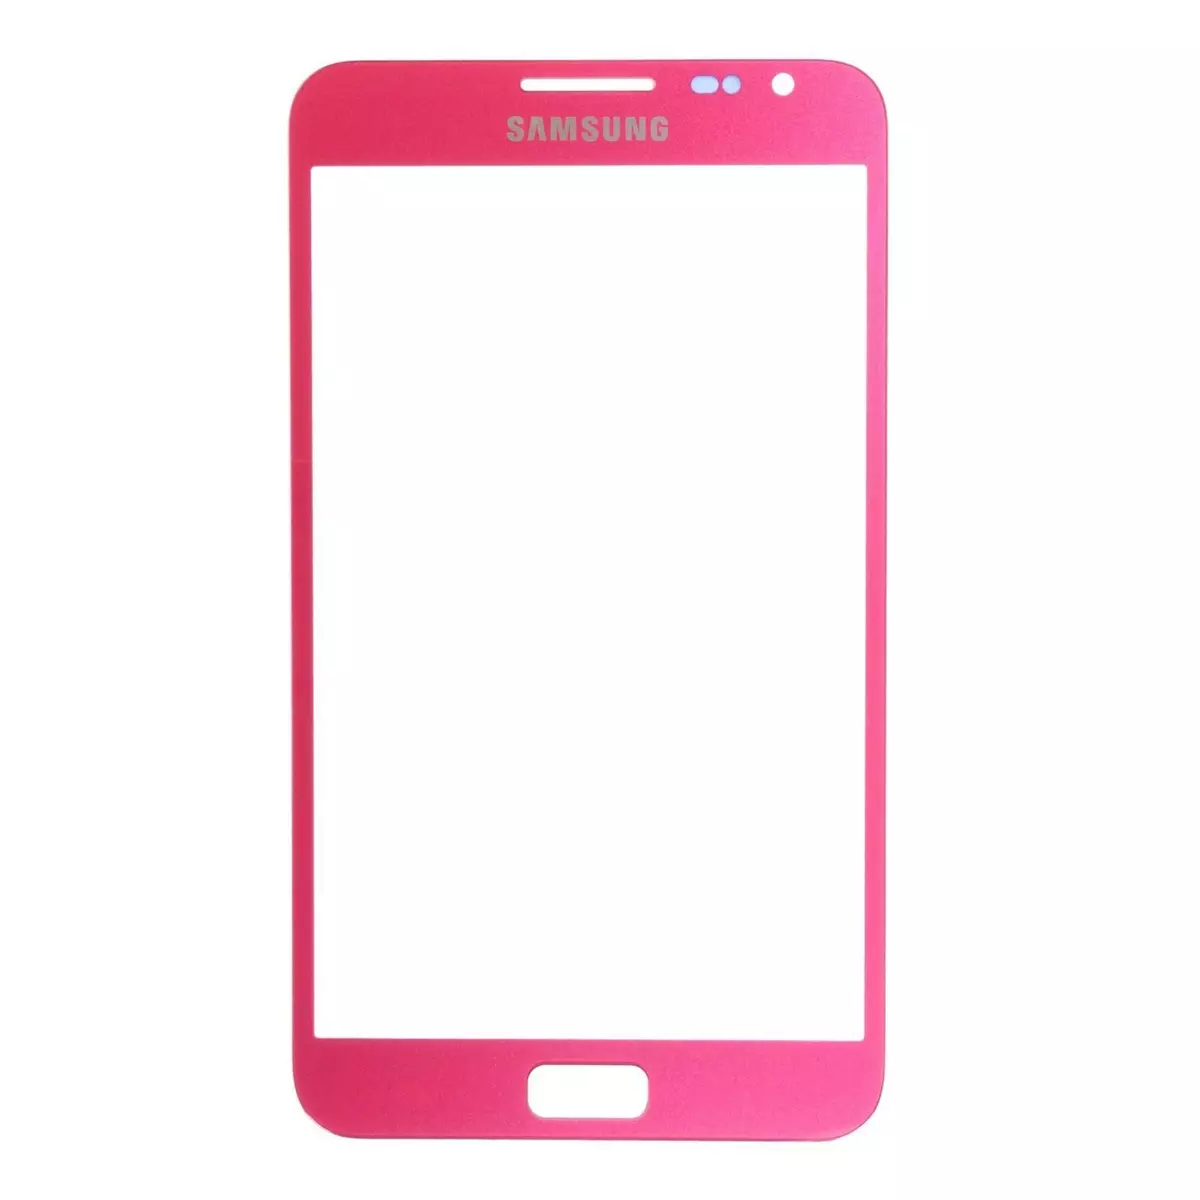 Samsung Vitre écran de façade rose + adhésif pour Samsung Galaxy Note N7000